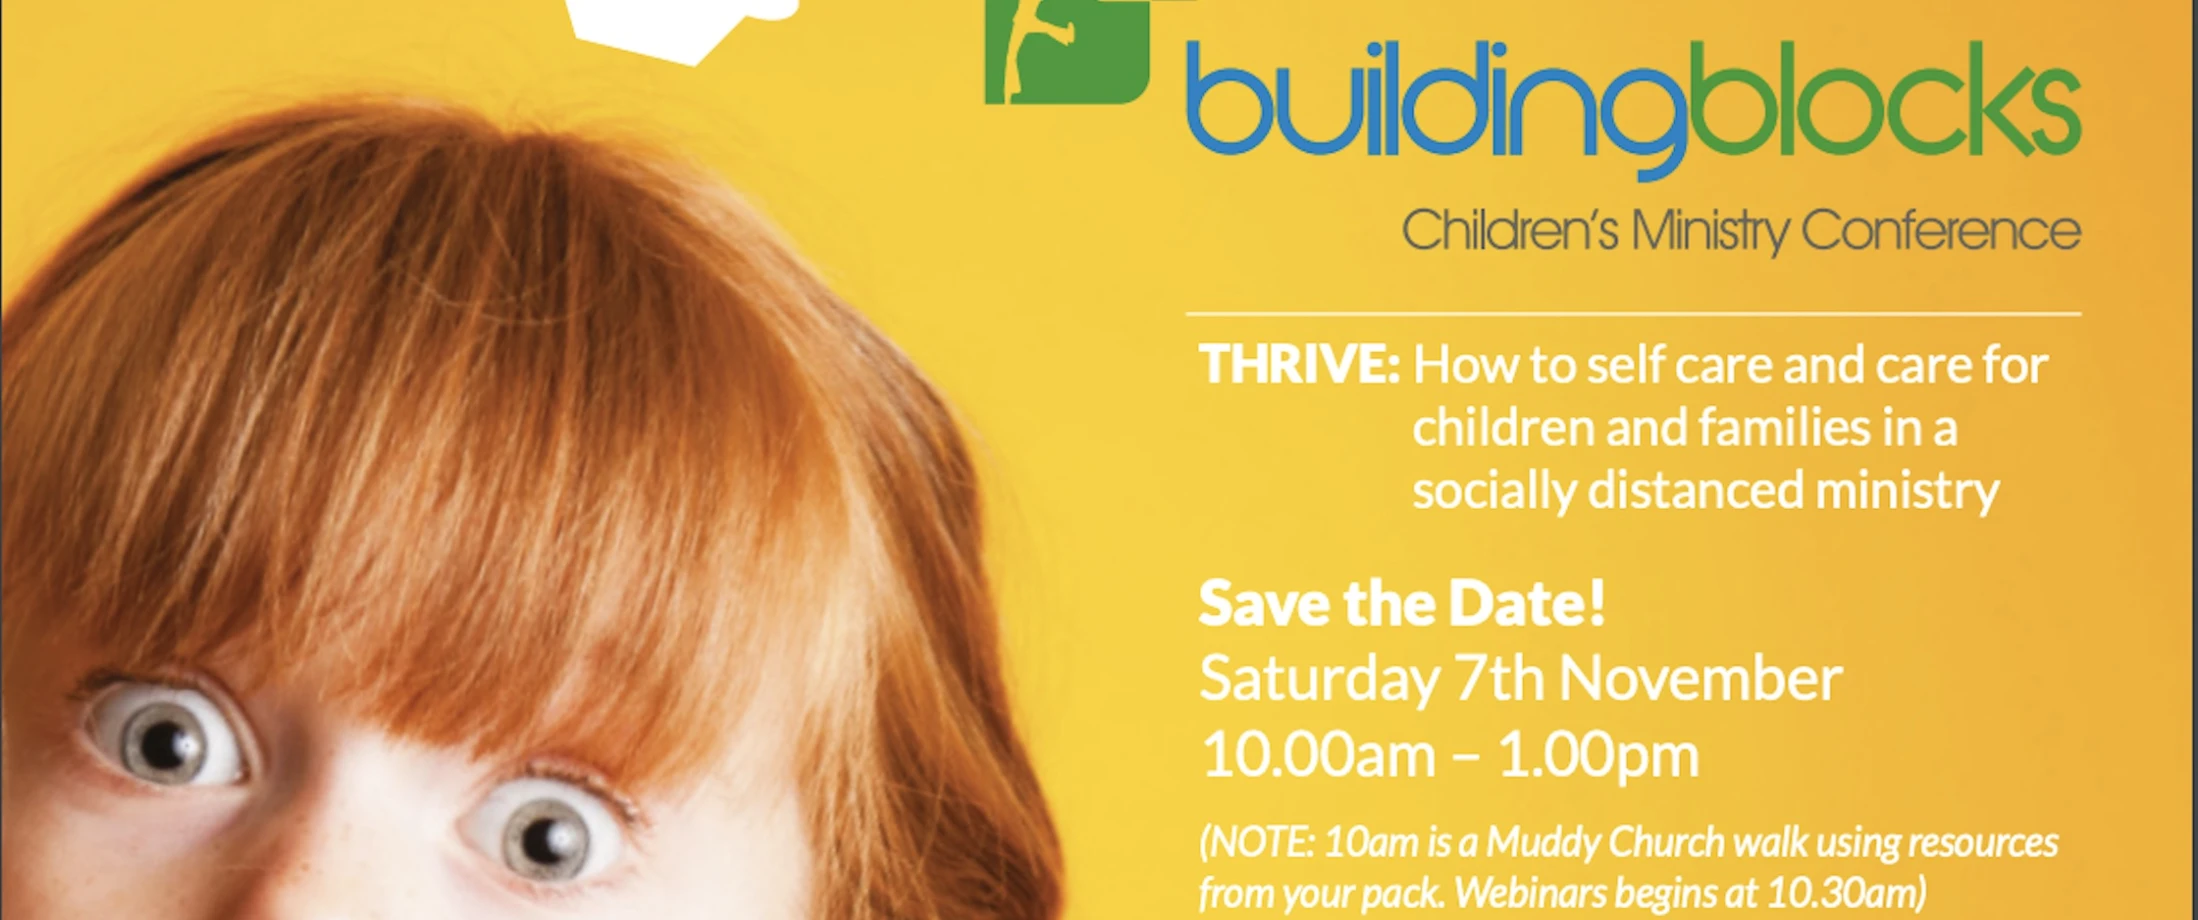 Building Blocks Online Children’s Ministry Conference 2020